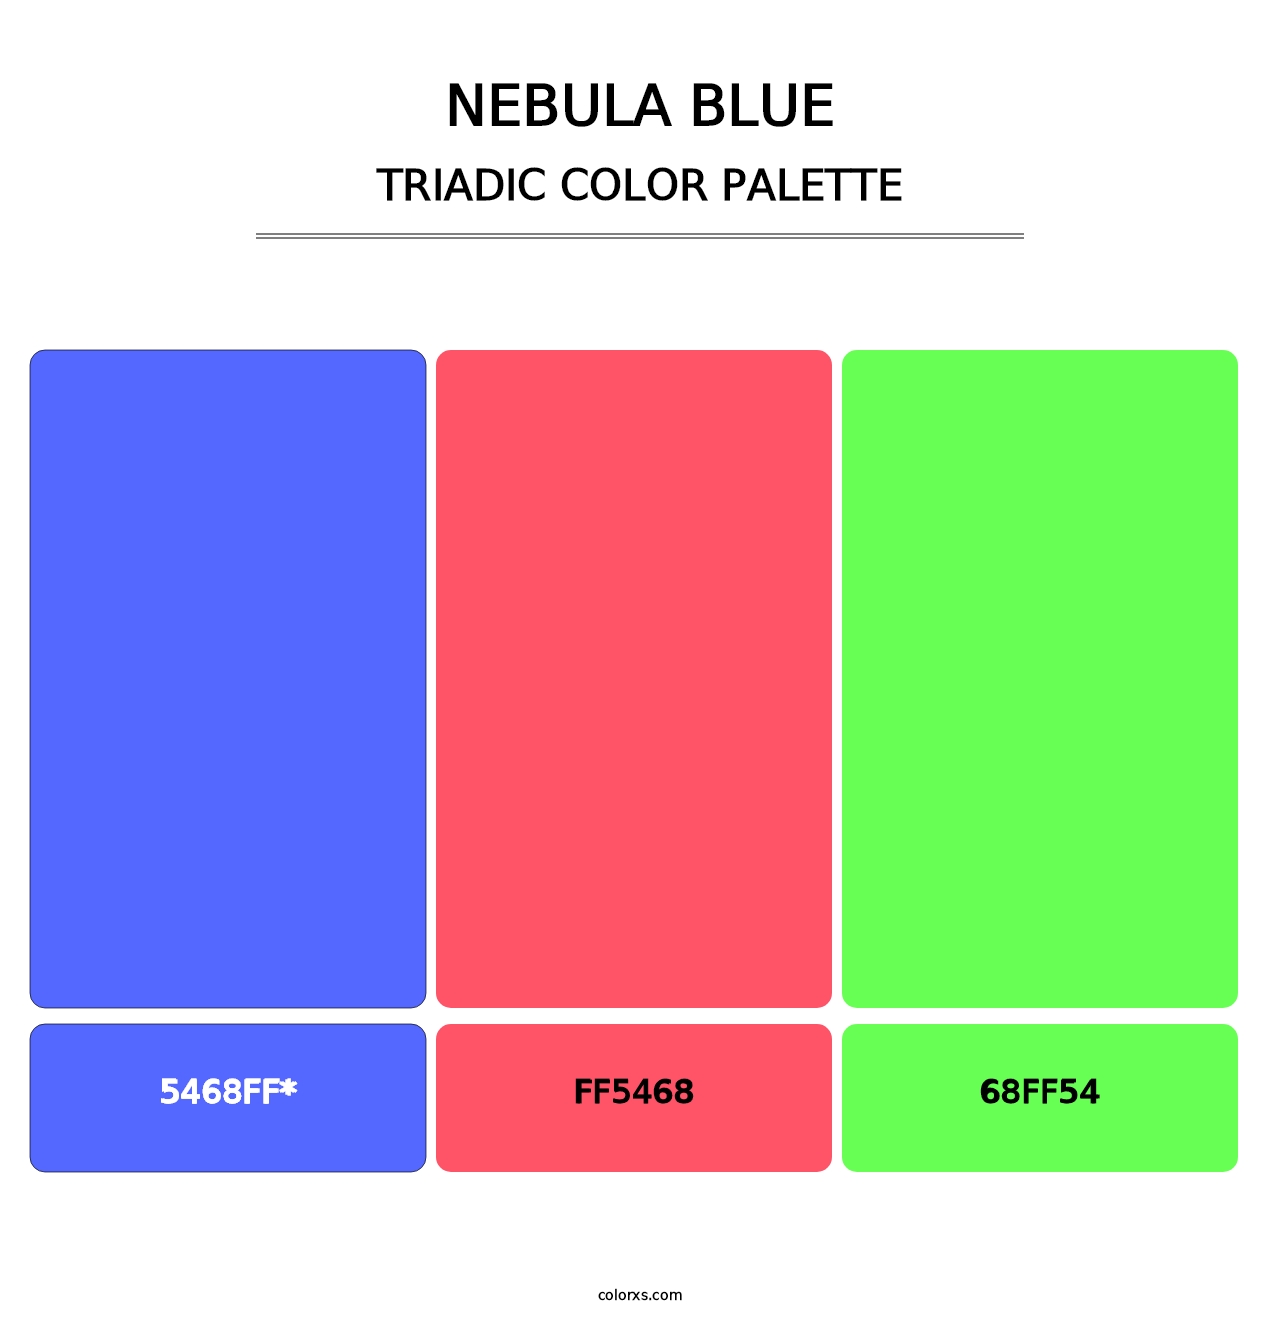 Nebula Blue - Triadic Color Palette